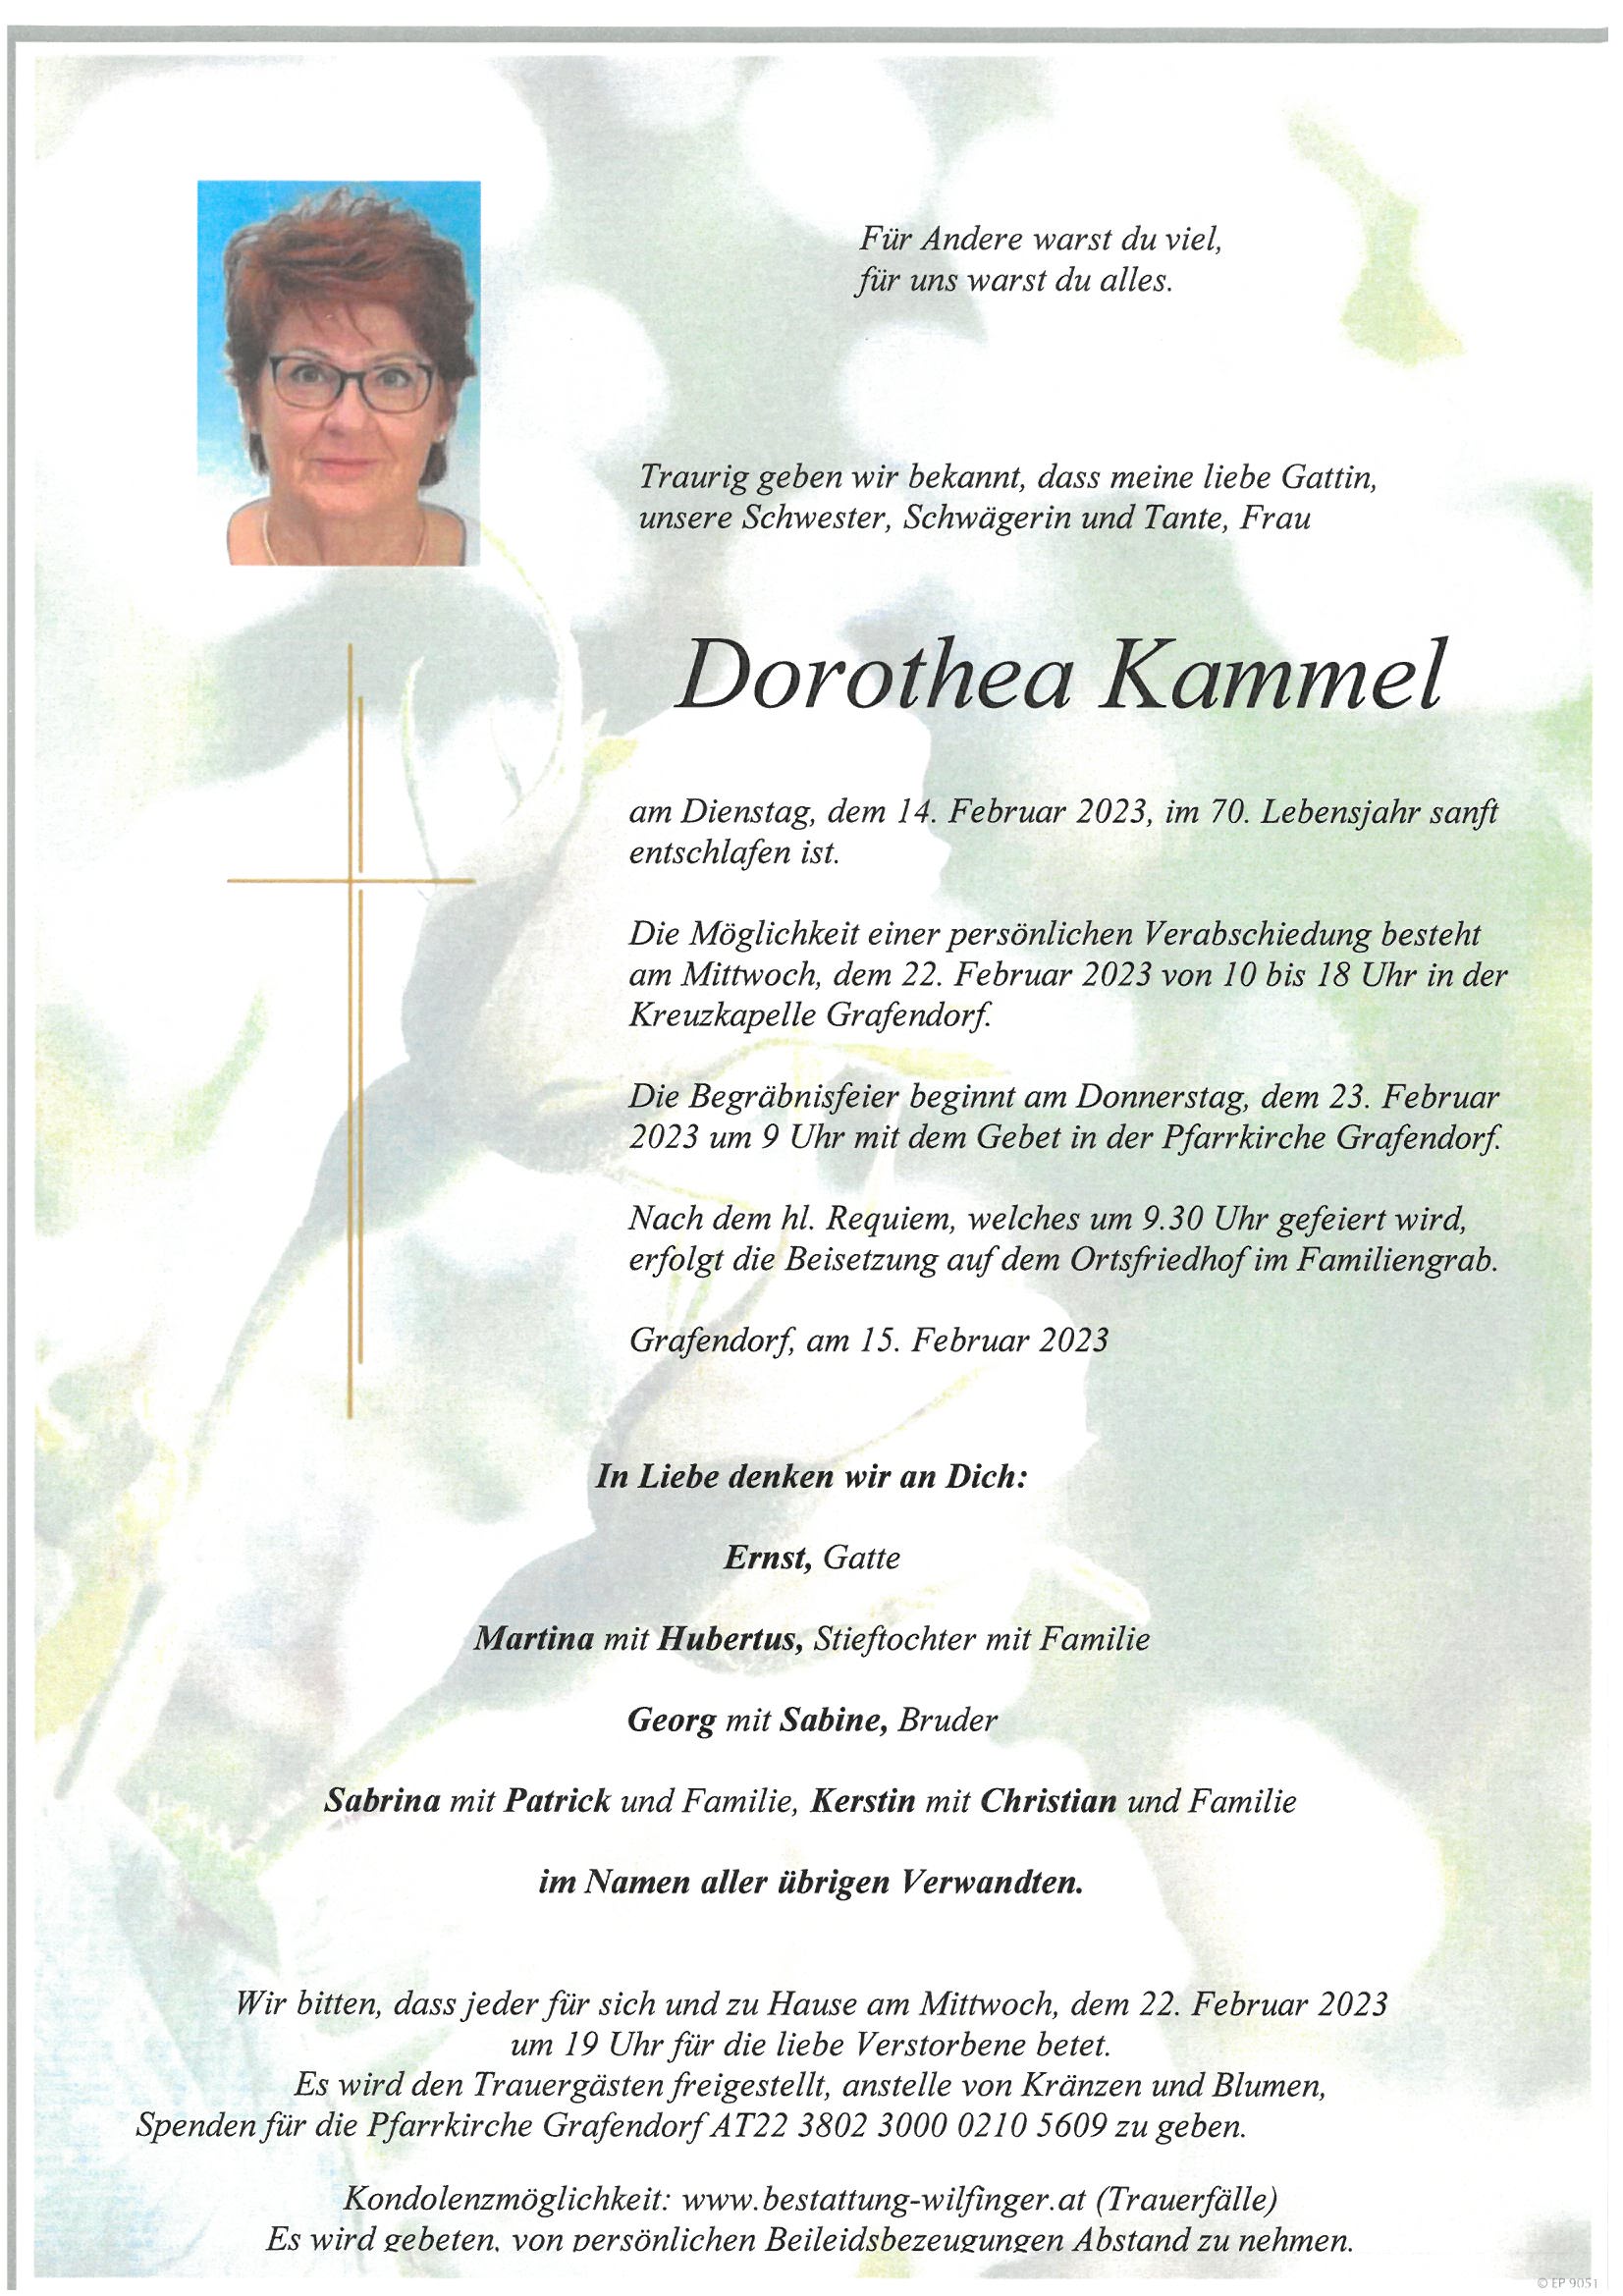 Dorothea Kammel, Grafendorf